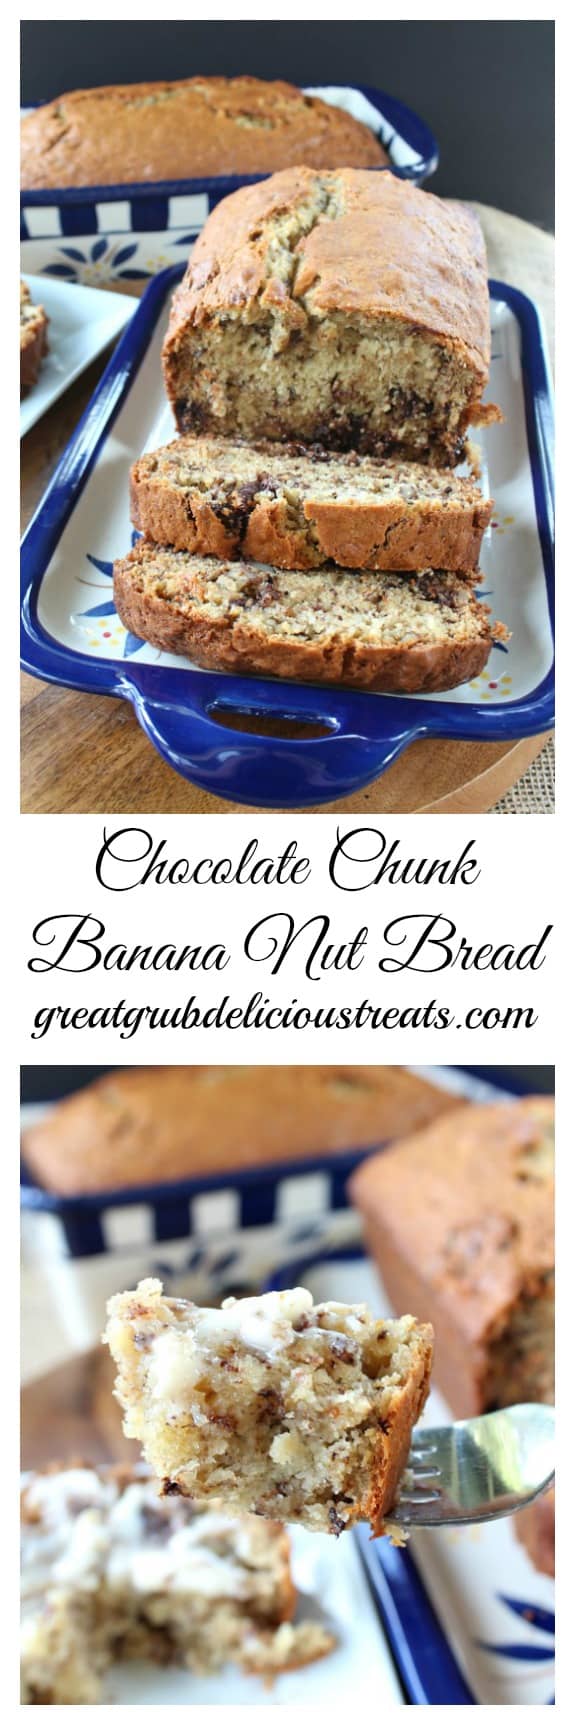 Chocolate Chunk Banana Nut Bread